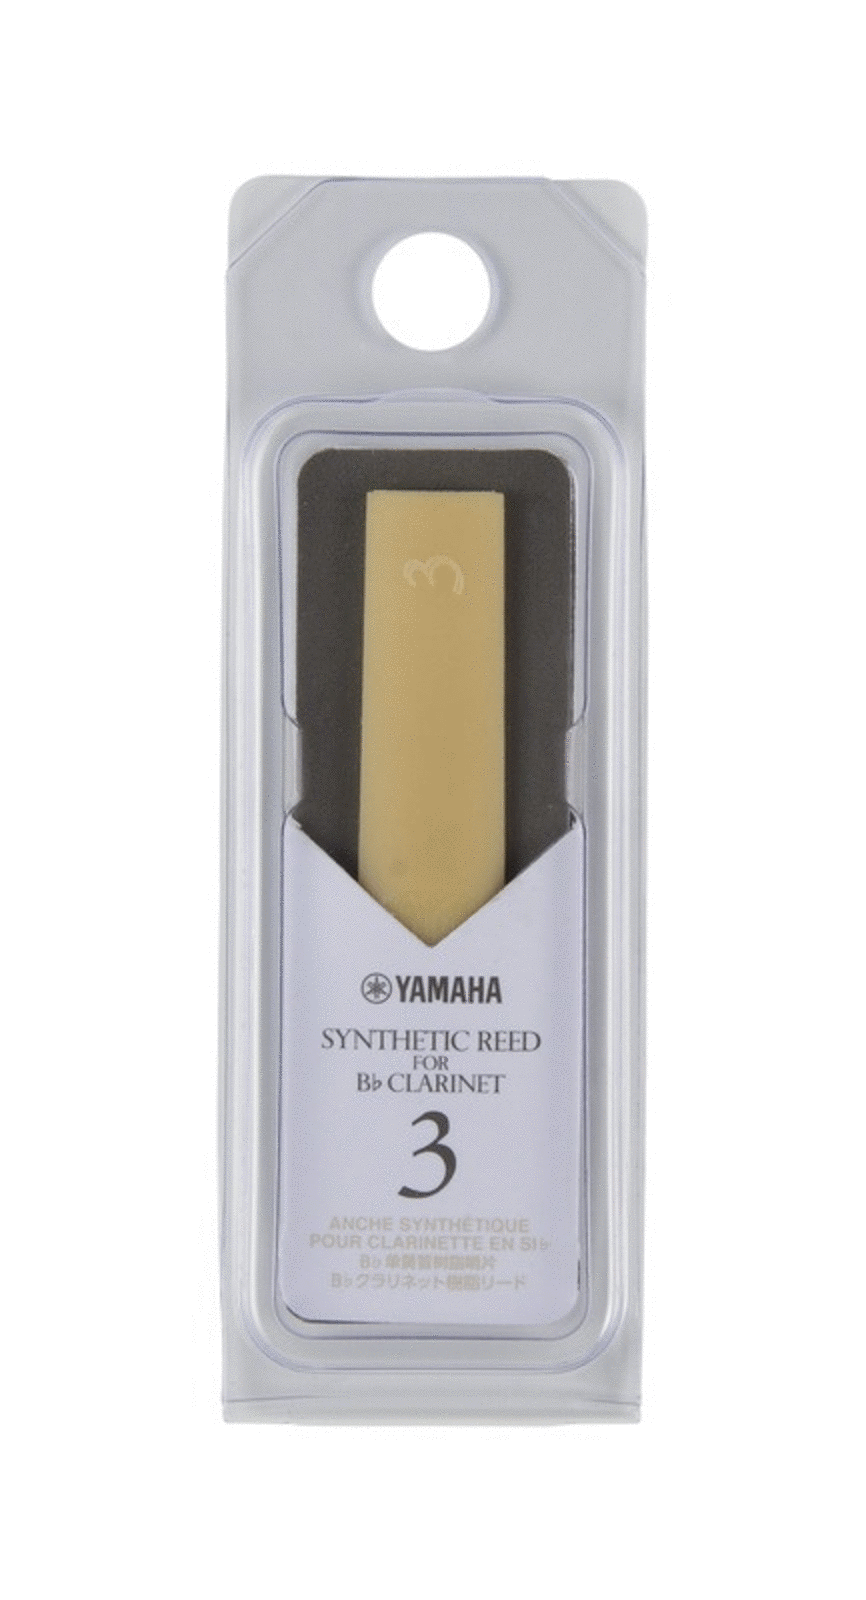 Yamaha Clarinet 3.0 Synthetic Reed